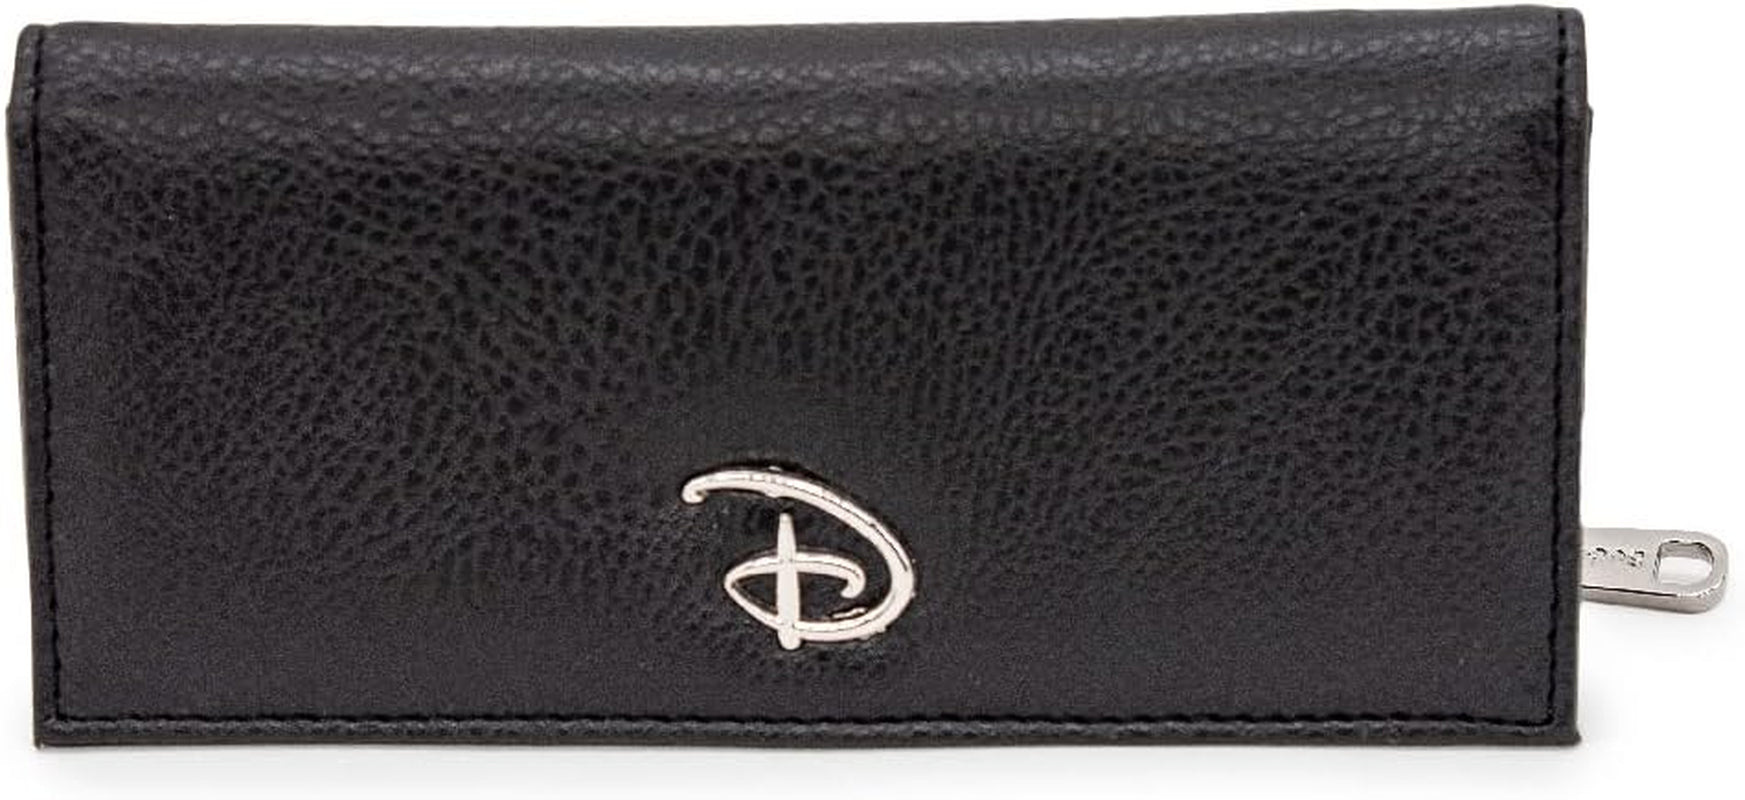 Disney Wallet, Fold Over, Snap Pouch, Disney Signature D Logo Silver, Black Vegan Leather